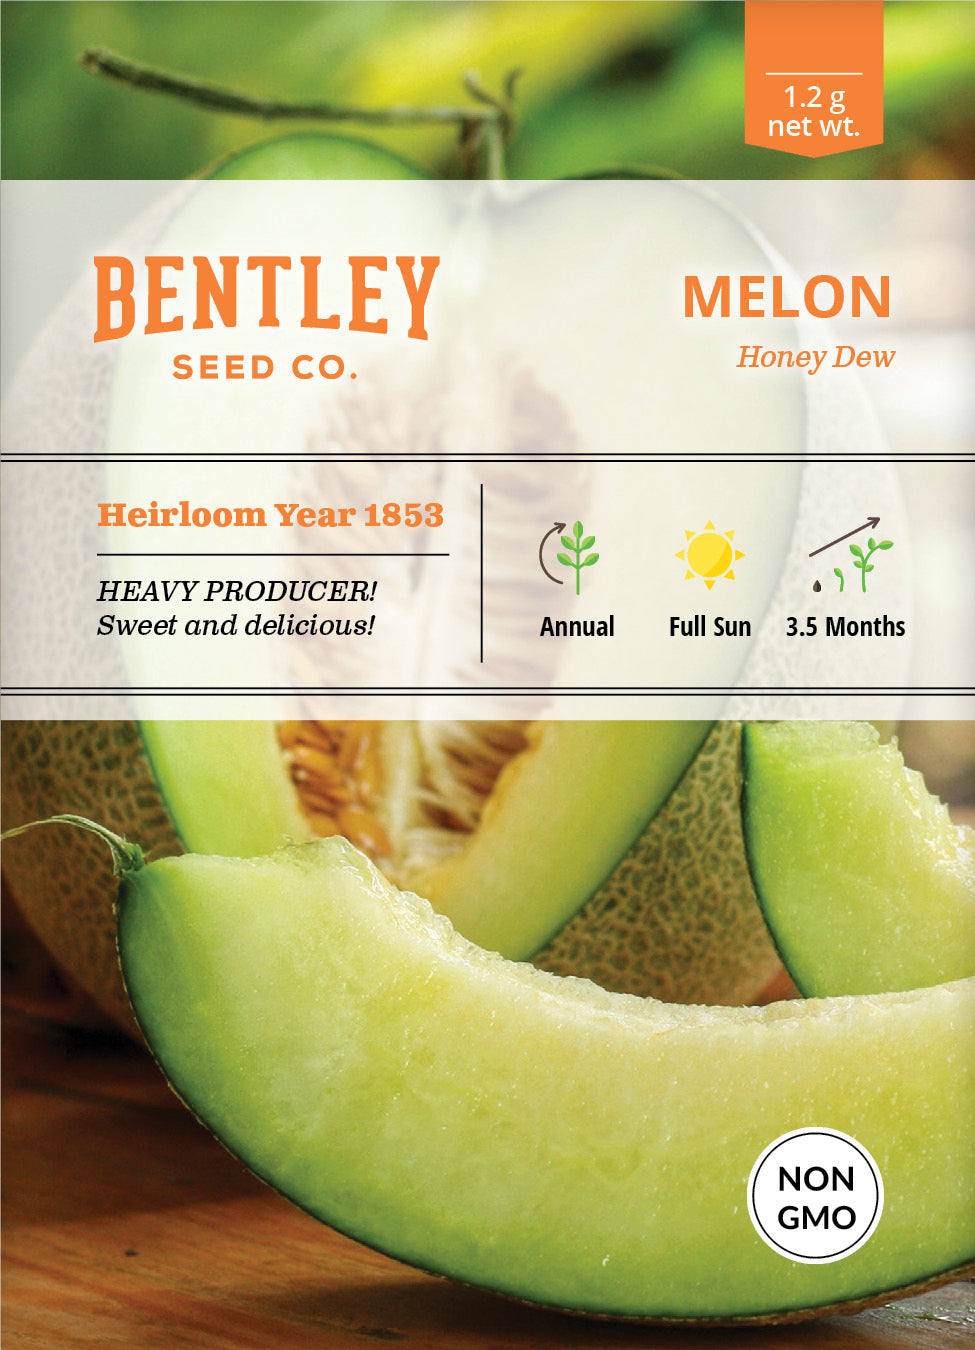 Melon Honey Dew – Weston seed